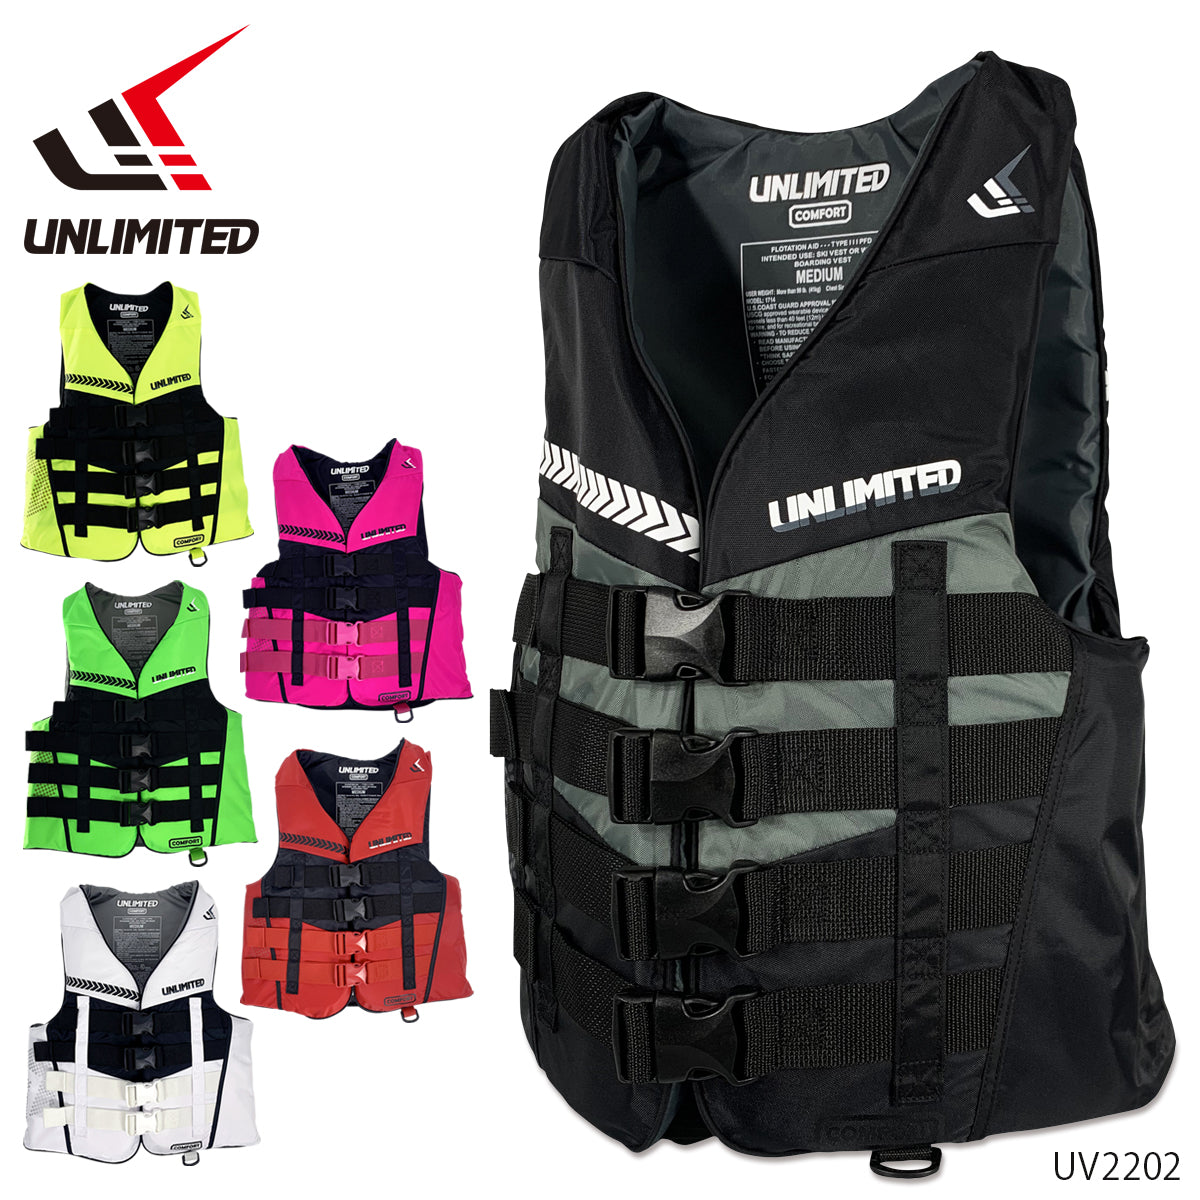 UNLIMITED COMFORT UV2202 Life Jacket Men's Jet Ski Nylon Vest Small Special JCI Preliminary Examination USCG